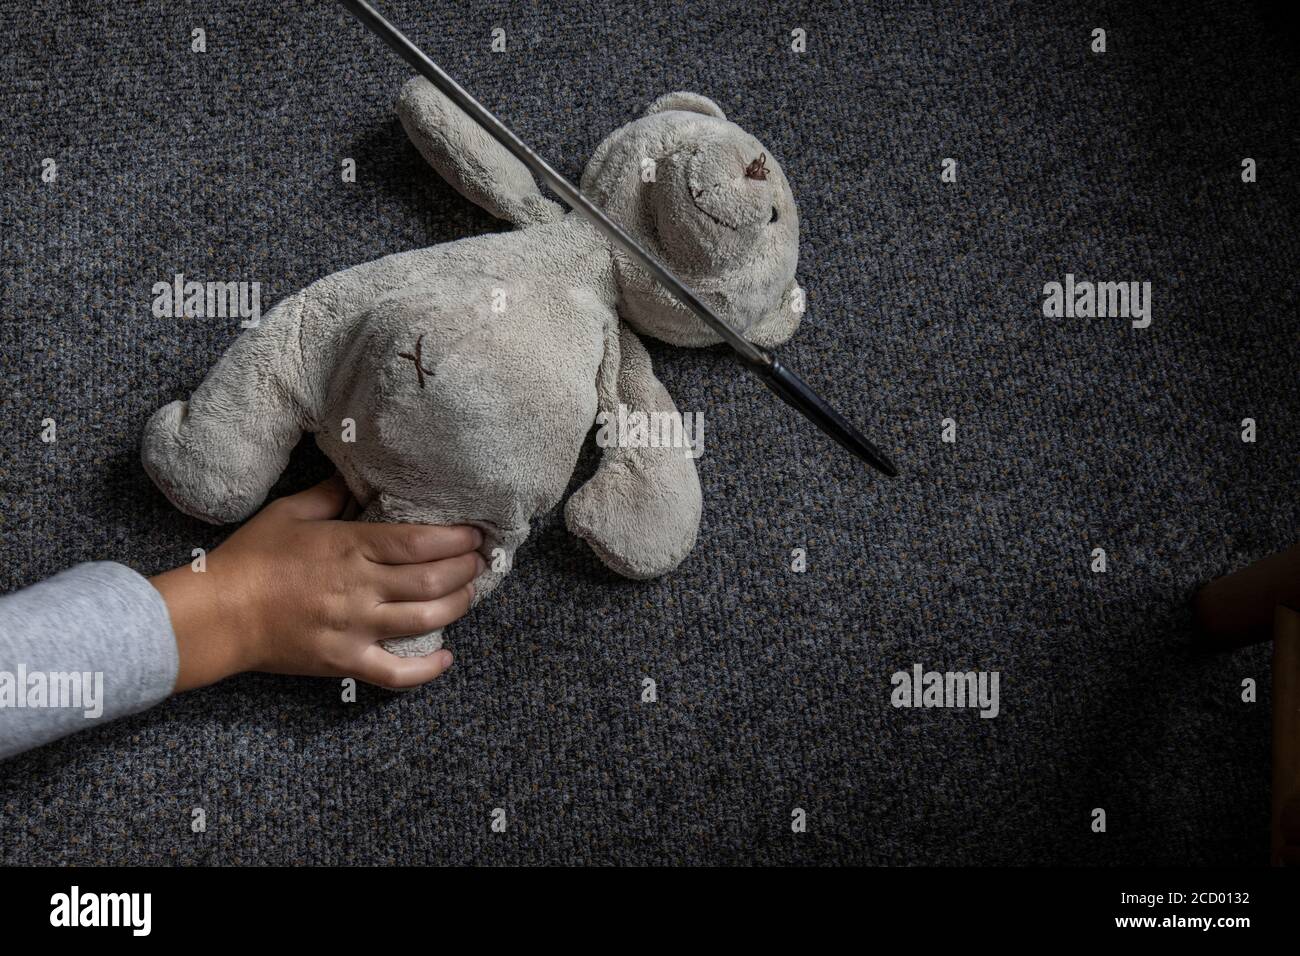 Teddy bear beheaded Stock Photo